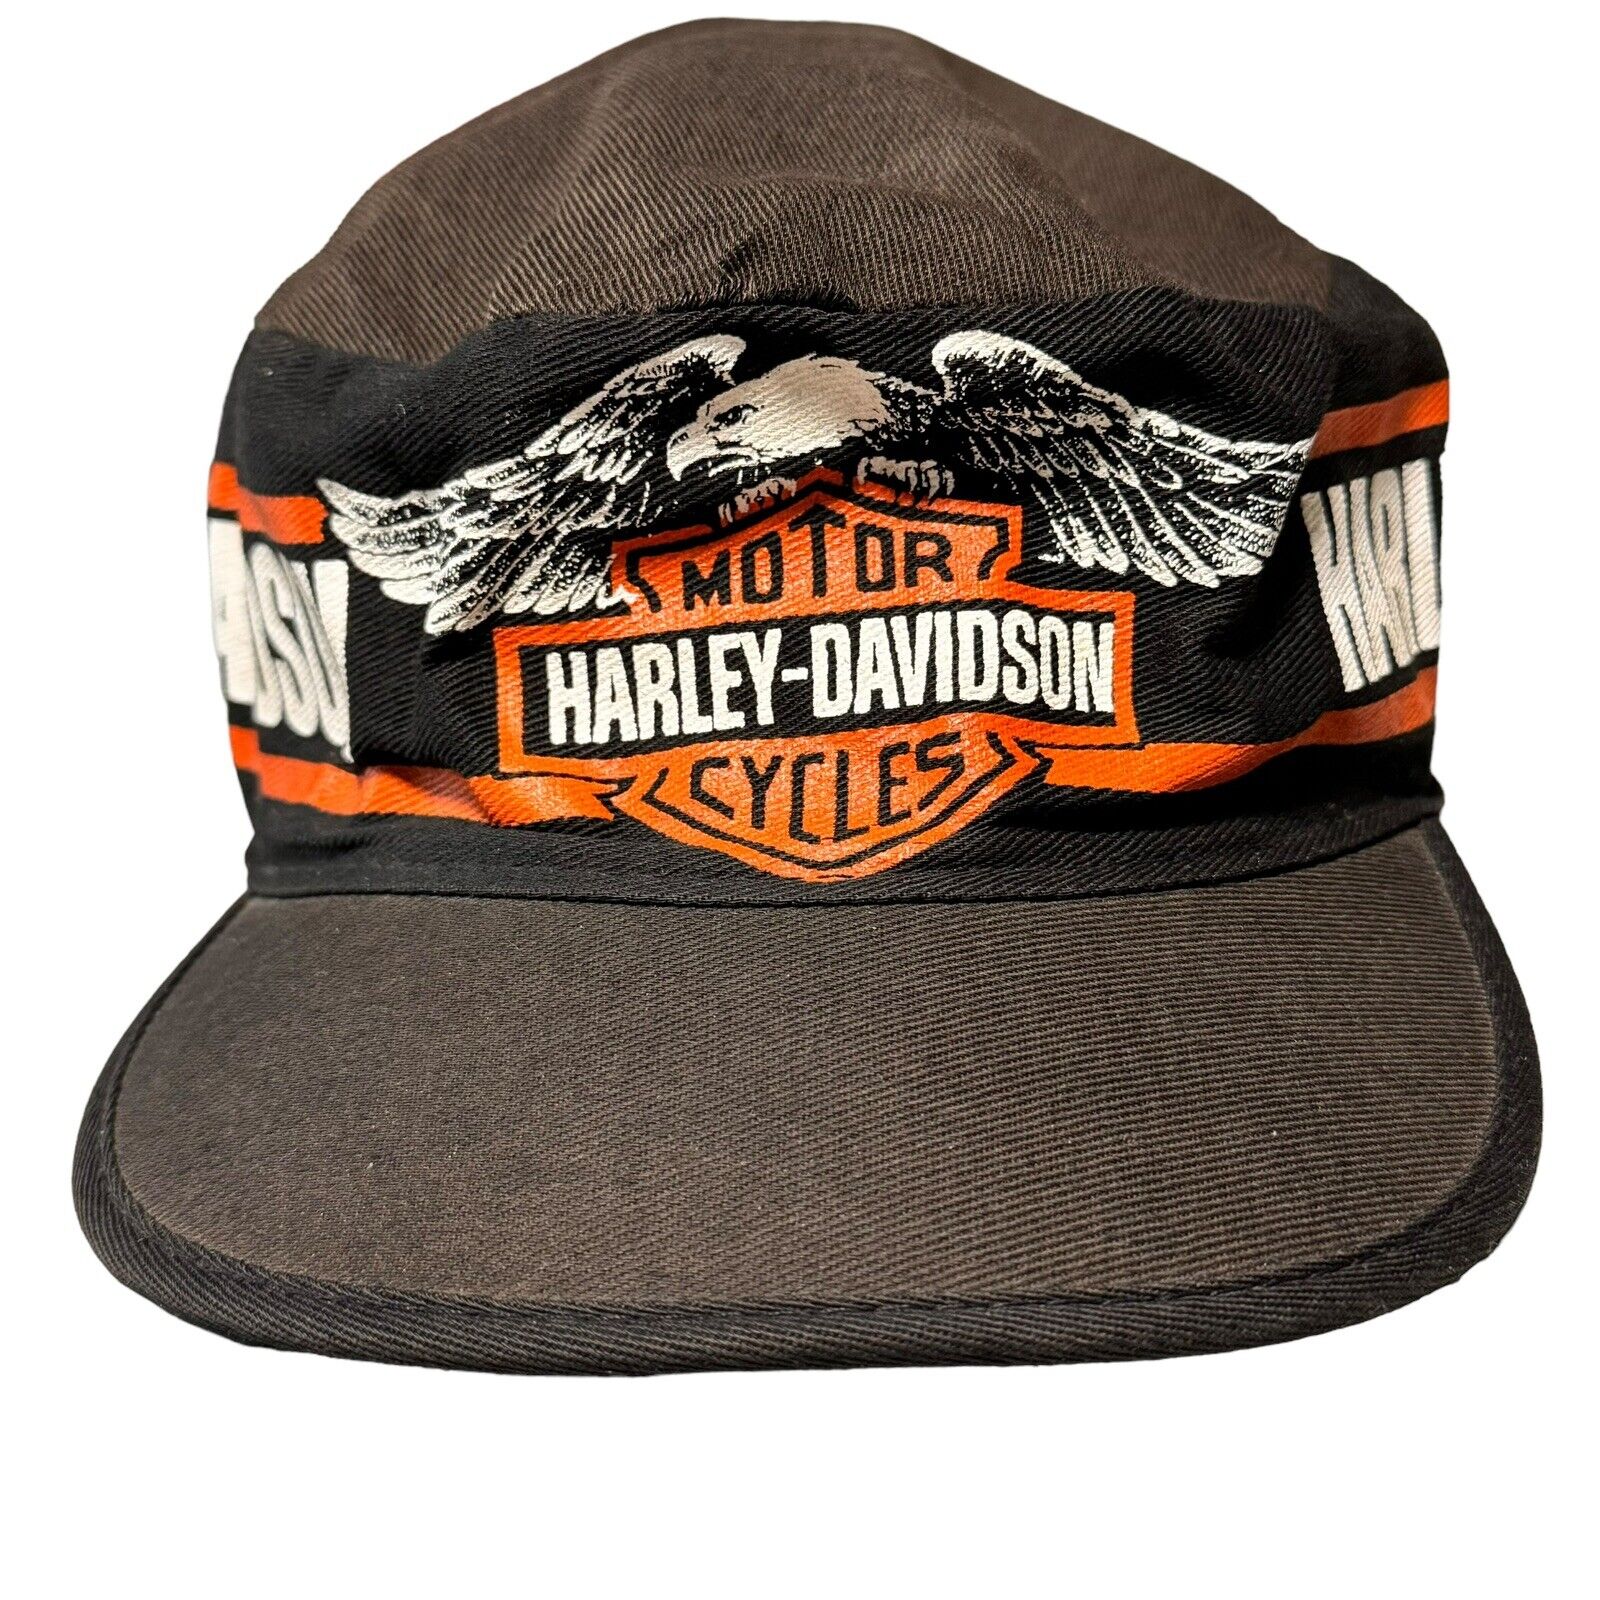 Harley Davidson Motorcycles Screaming Eagle Painters Hat 80s Adult Size Vintage